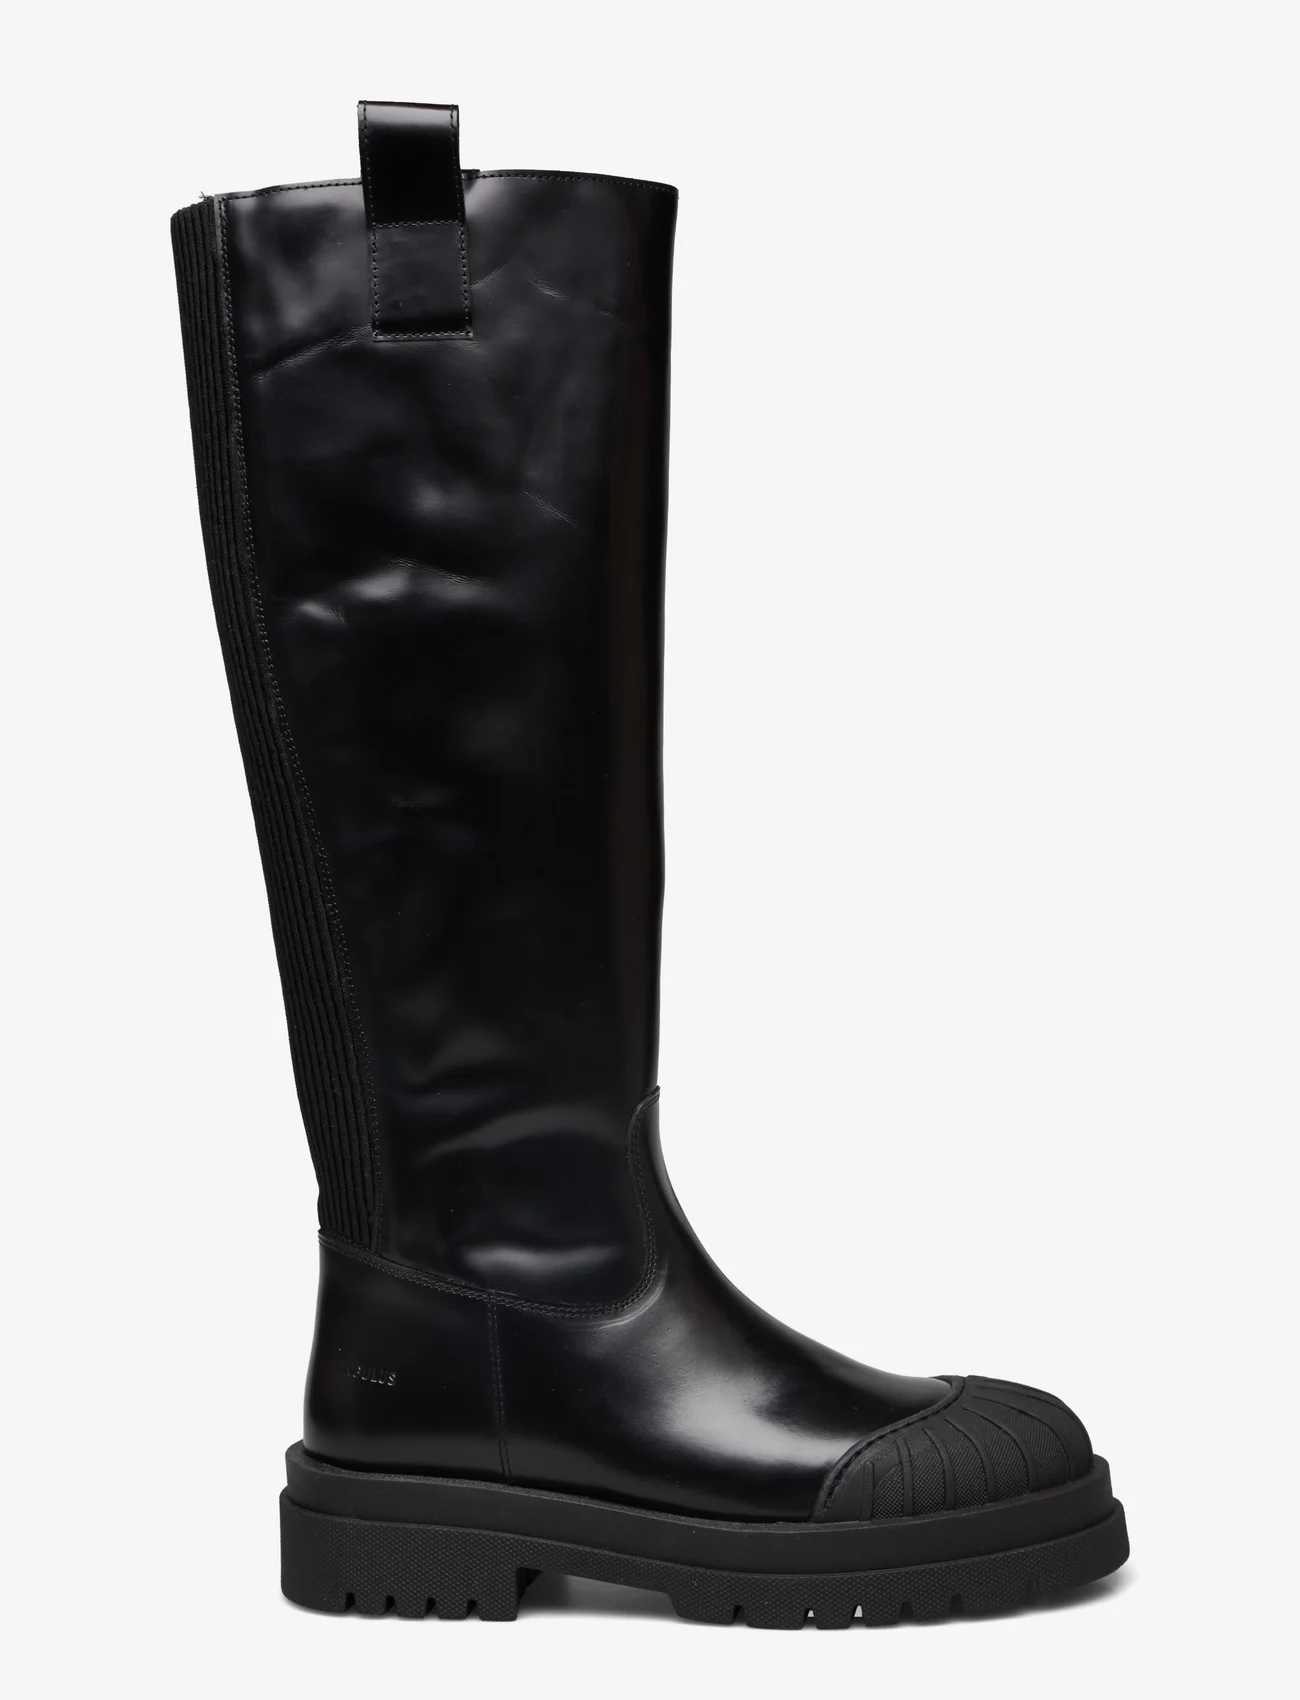 ANGULUS - Boots - flat - kniehohe stiefel - 1425/019 black/black - 1